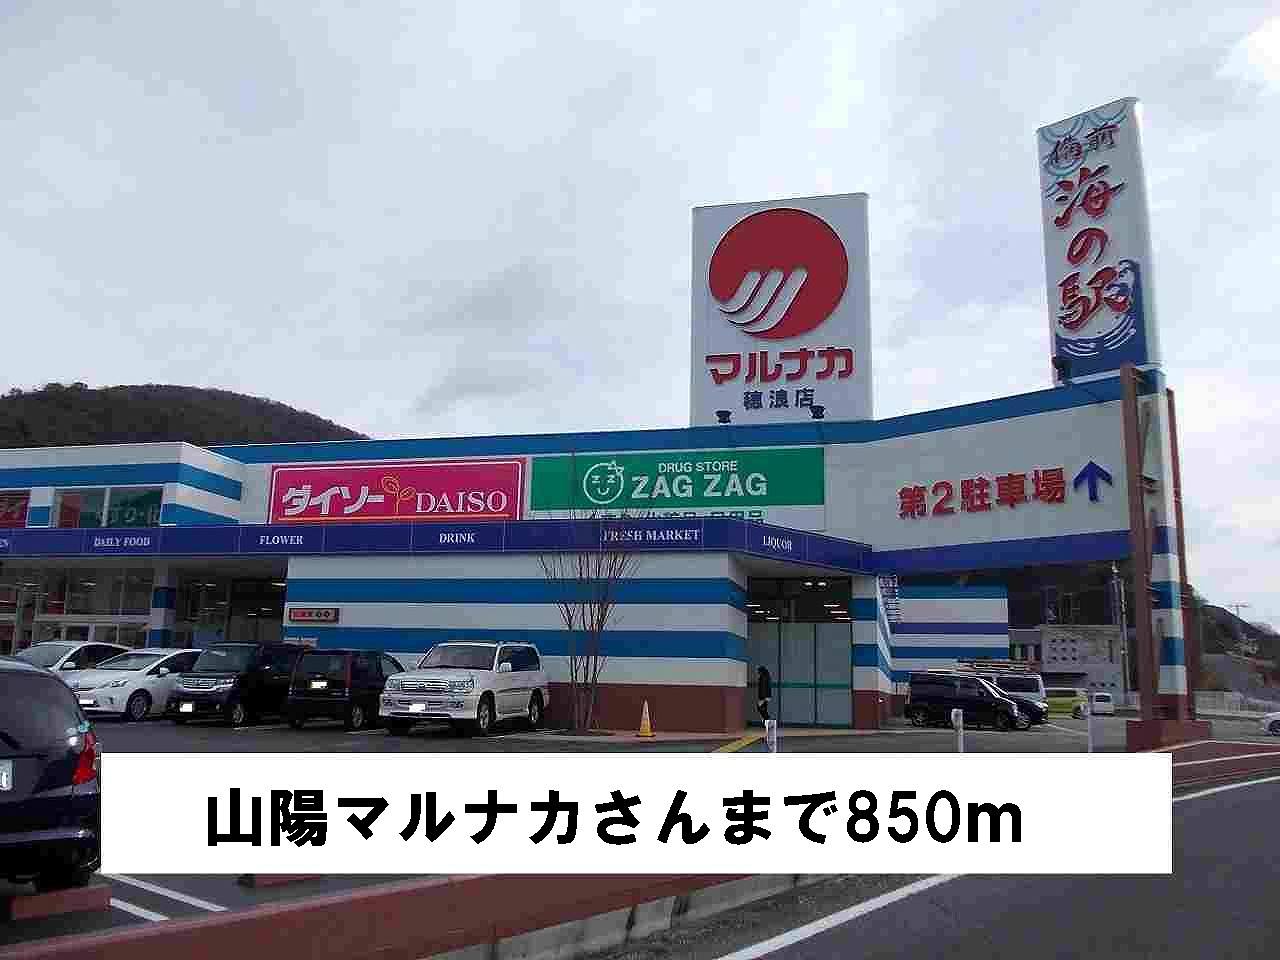 Supermarket. 850m to Sanyo Marunaka's (super)